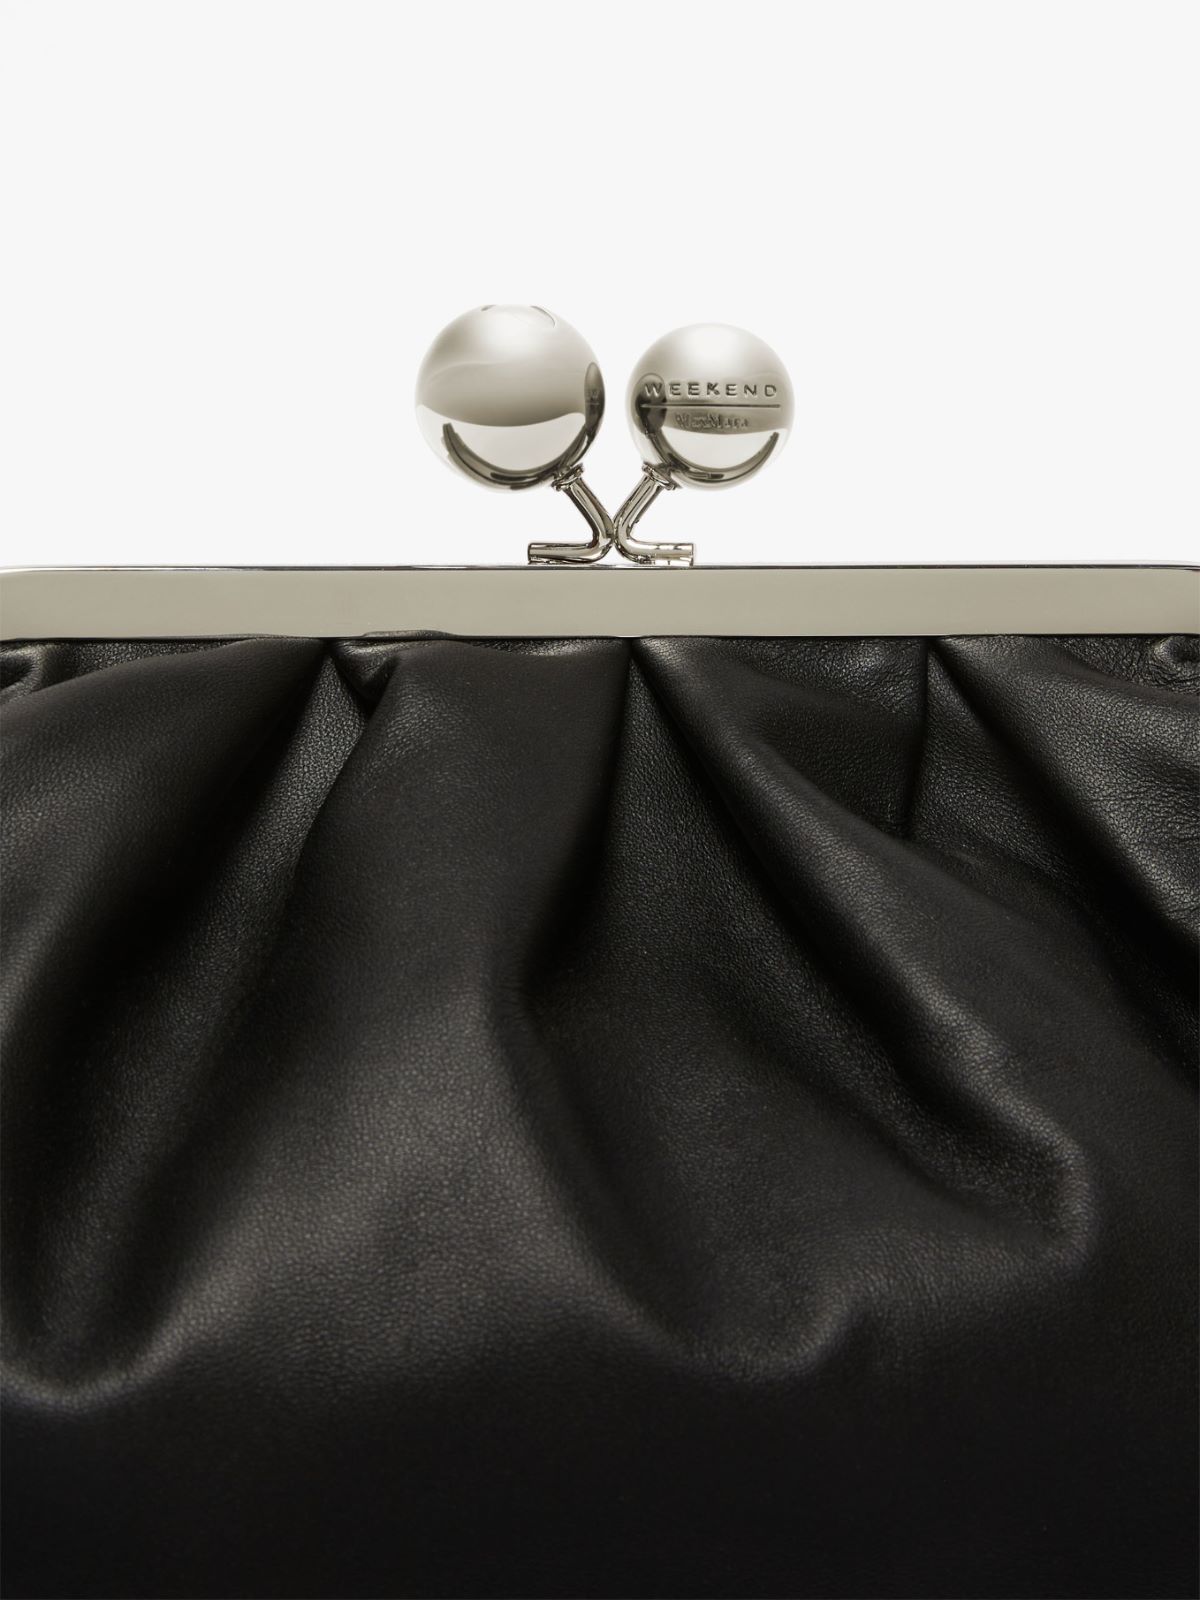 Medium Pasticcino Bag in nappa leather - BLACK - Weekend Max Mara - 5